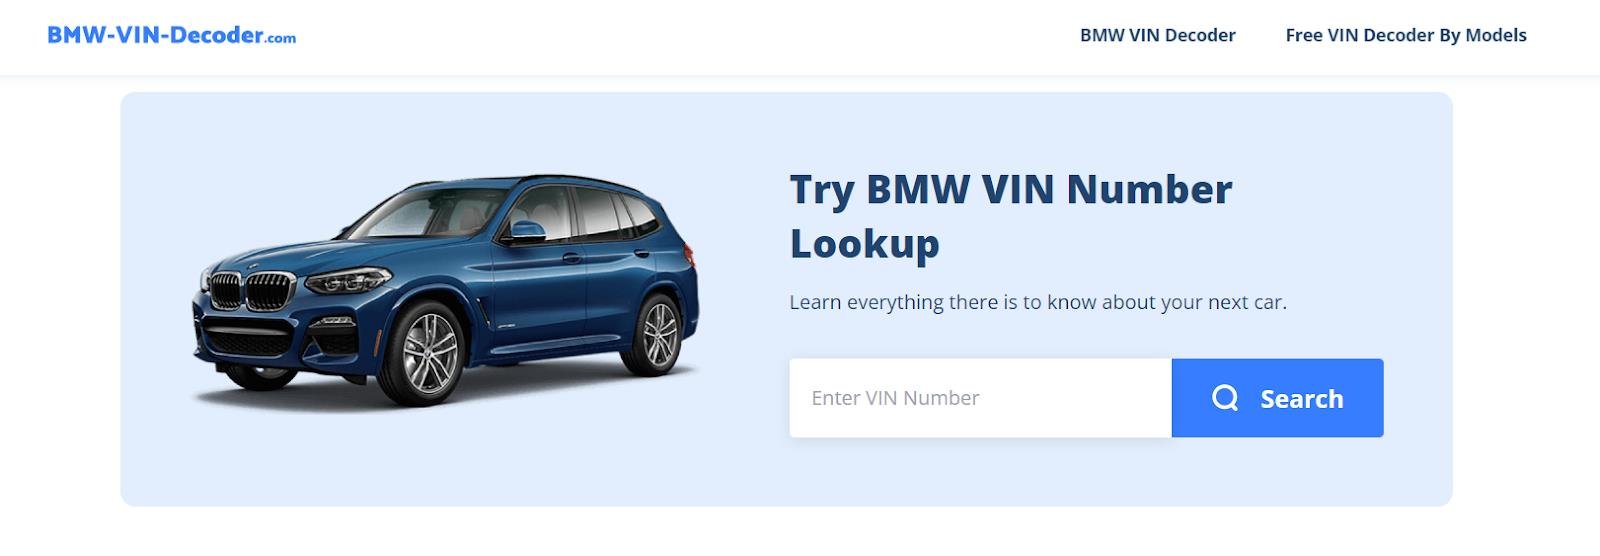 BMW-VIN-Decoder Review 2